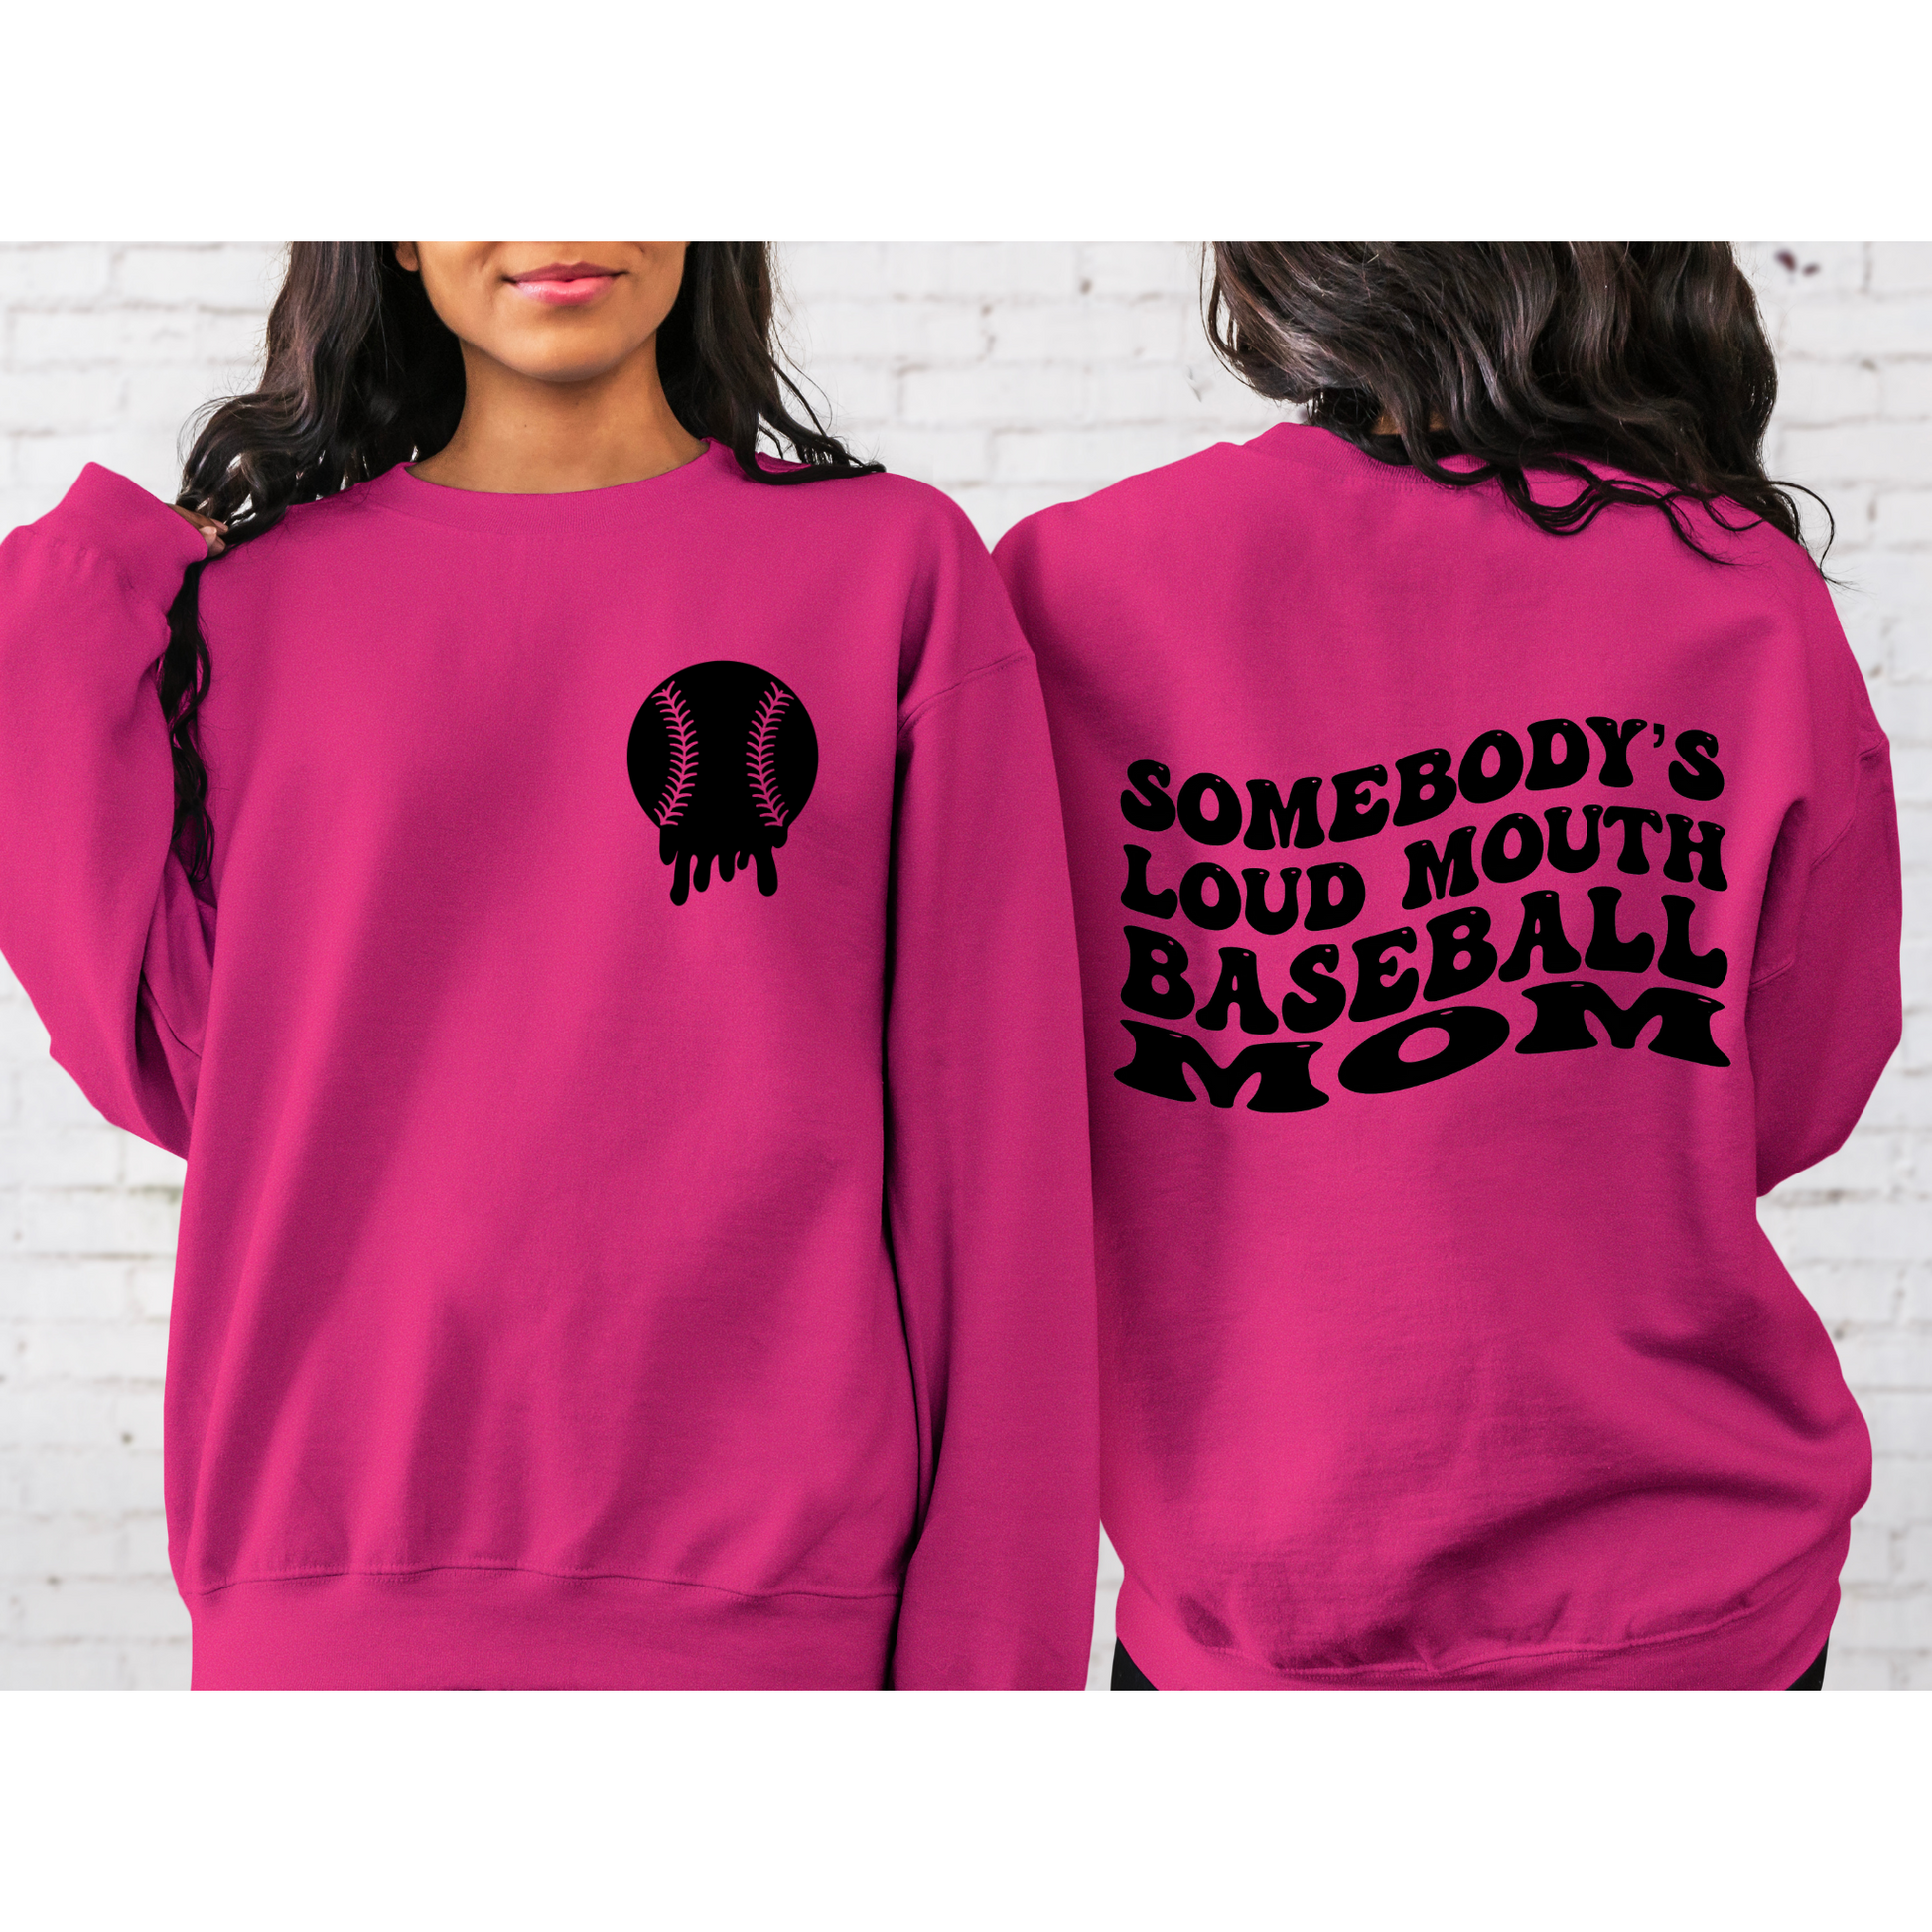 Somebody's Loud Mouth Baseball Mom Crewneck Sweatshirt Dark Pink